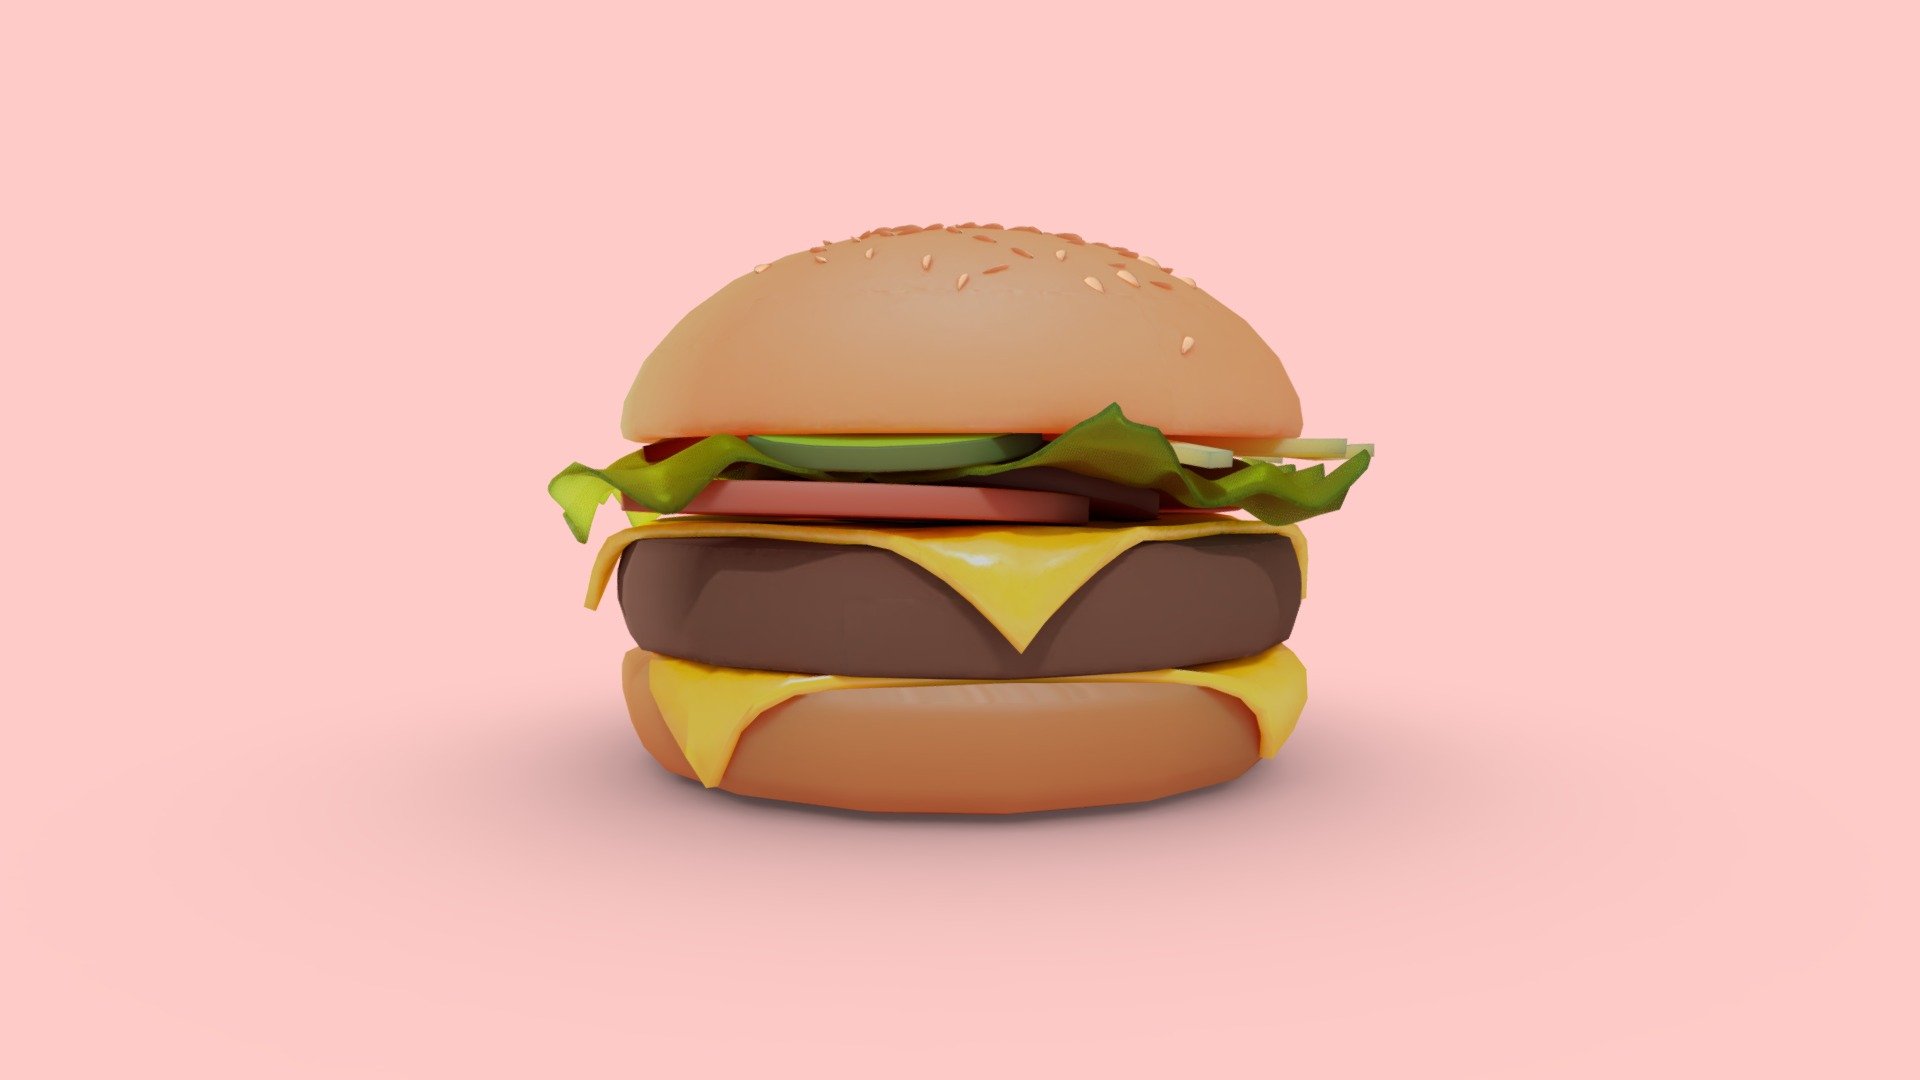 Figured I'd upload a cleaner version of another model I made.

Originally made in Blender for 3December2020 - Stylized Burger - Download Free 3D model by jakecircles 3d model